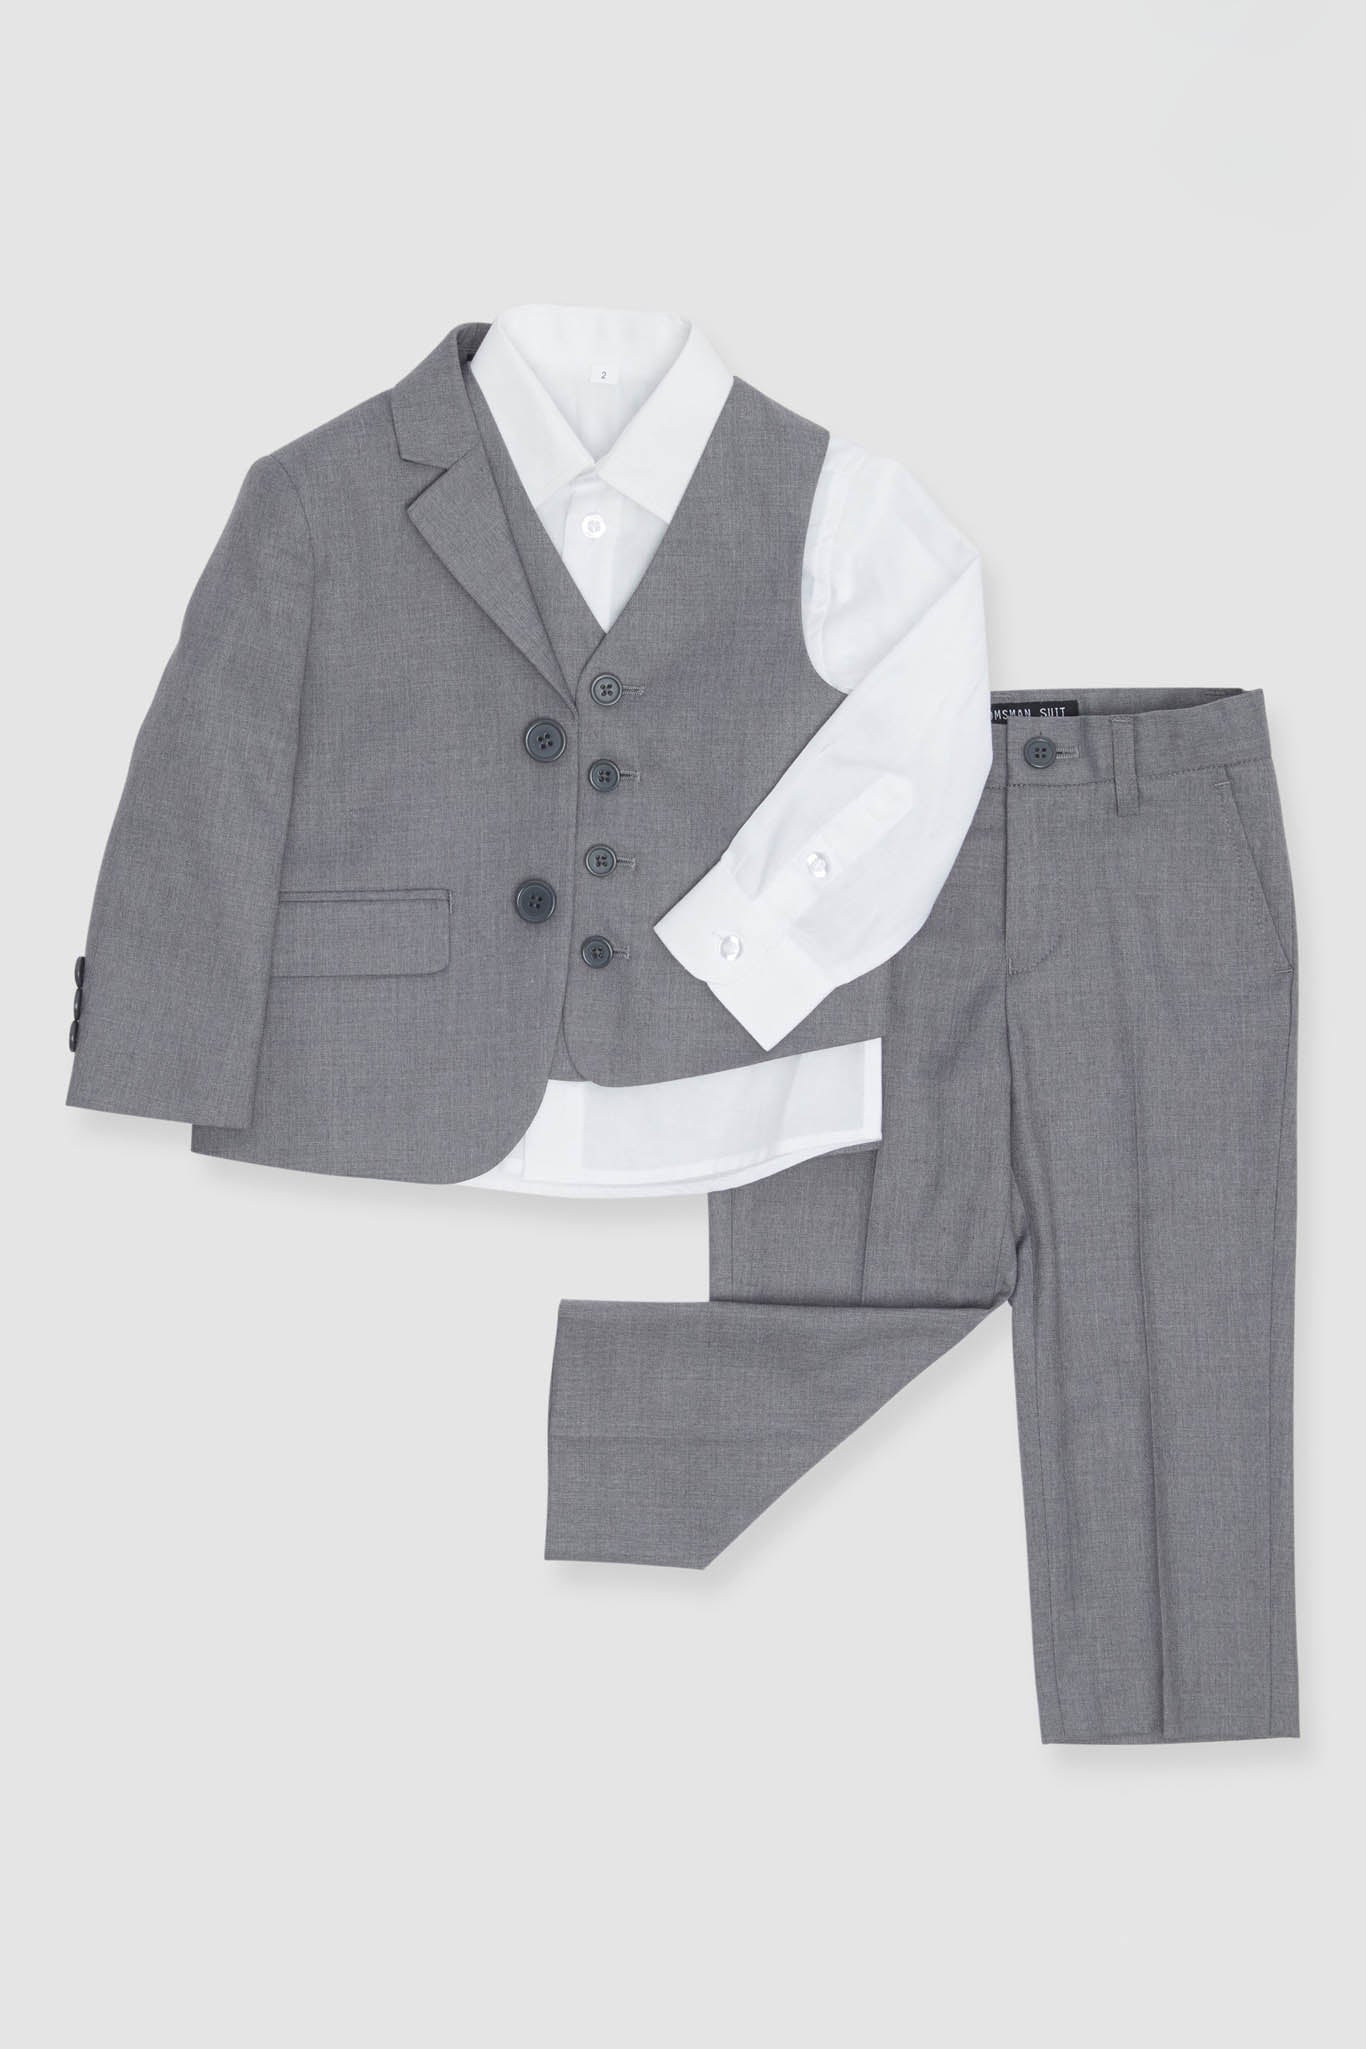 Textured Gray Kids Suit by SuitShop